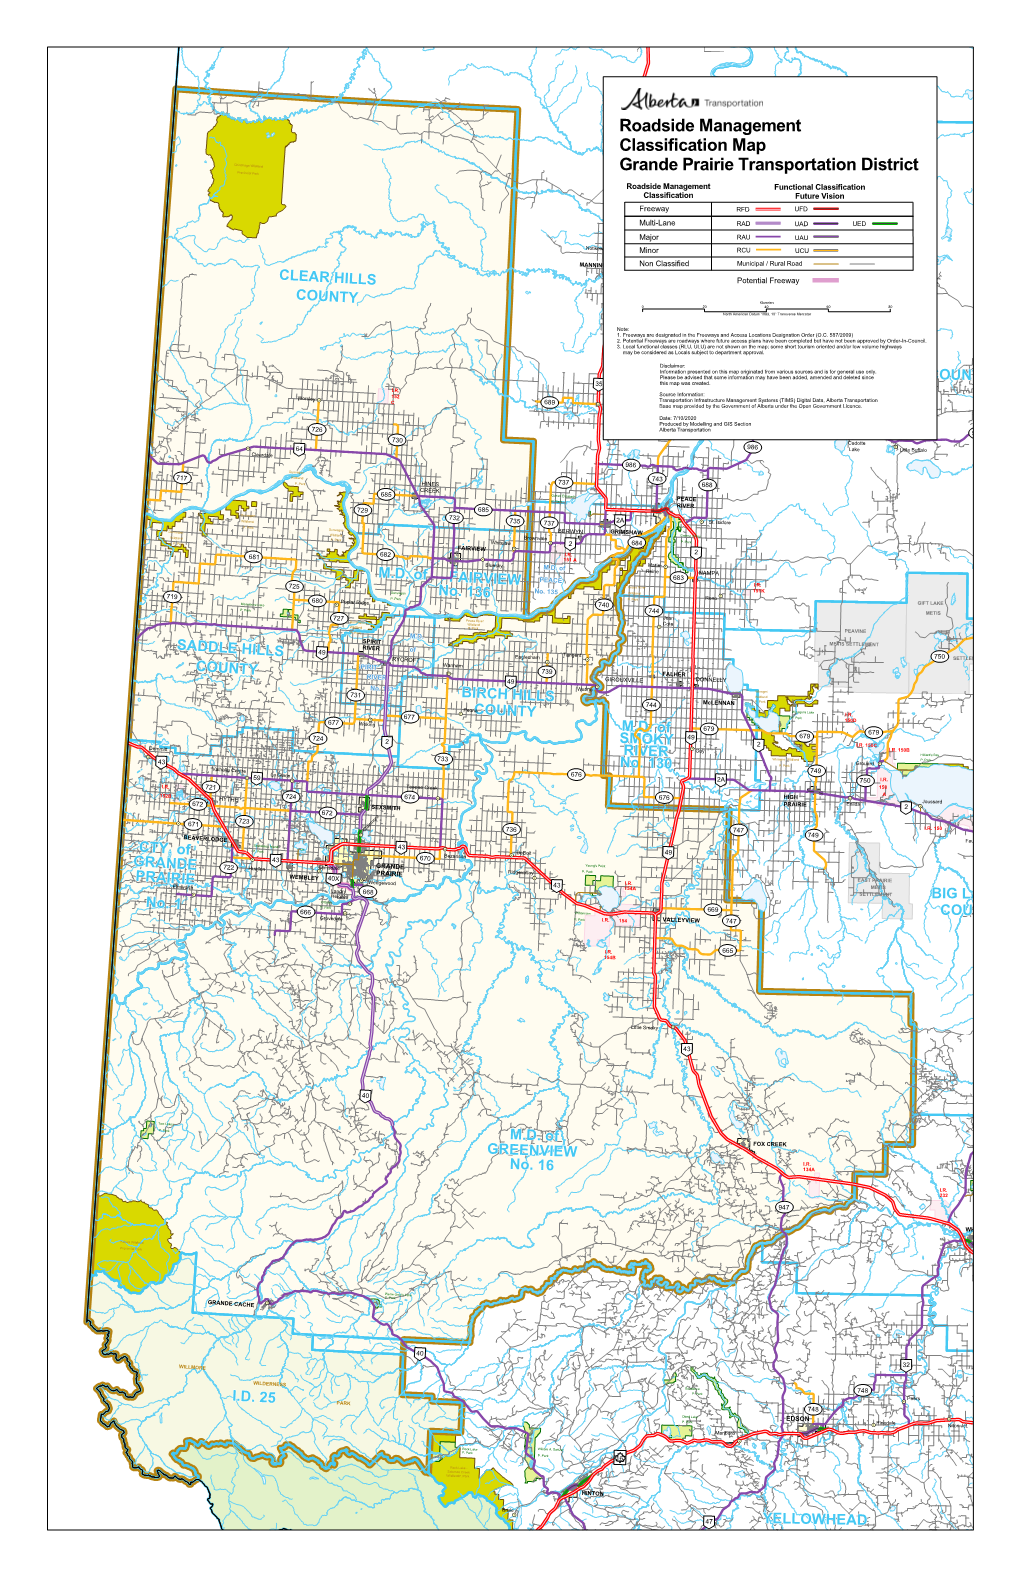 Roadside Management Classification Map 692 Ch Inchaga Wildland Grande Prairienotik Transportation District Provincial Park Ewin P